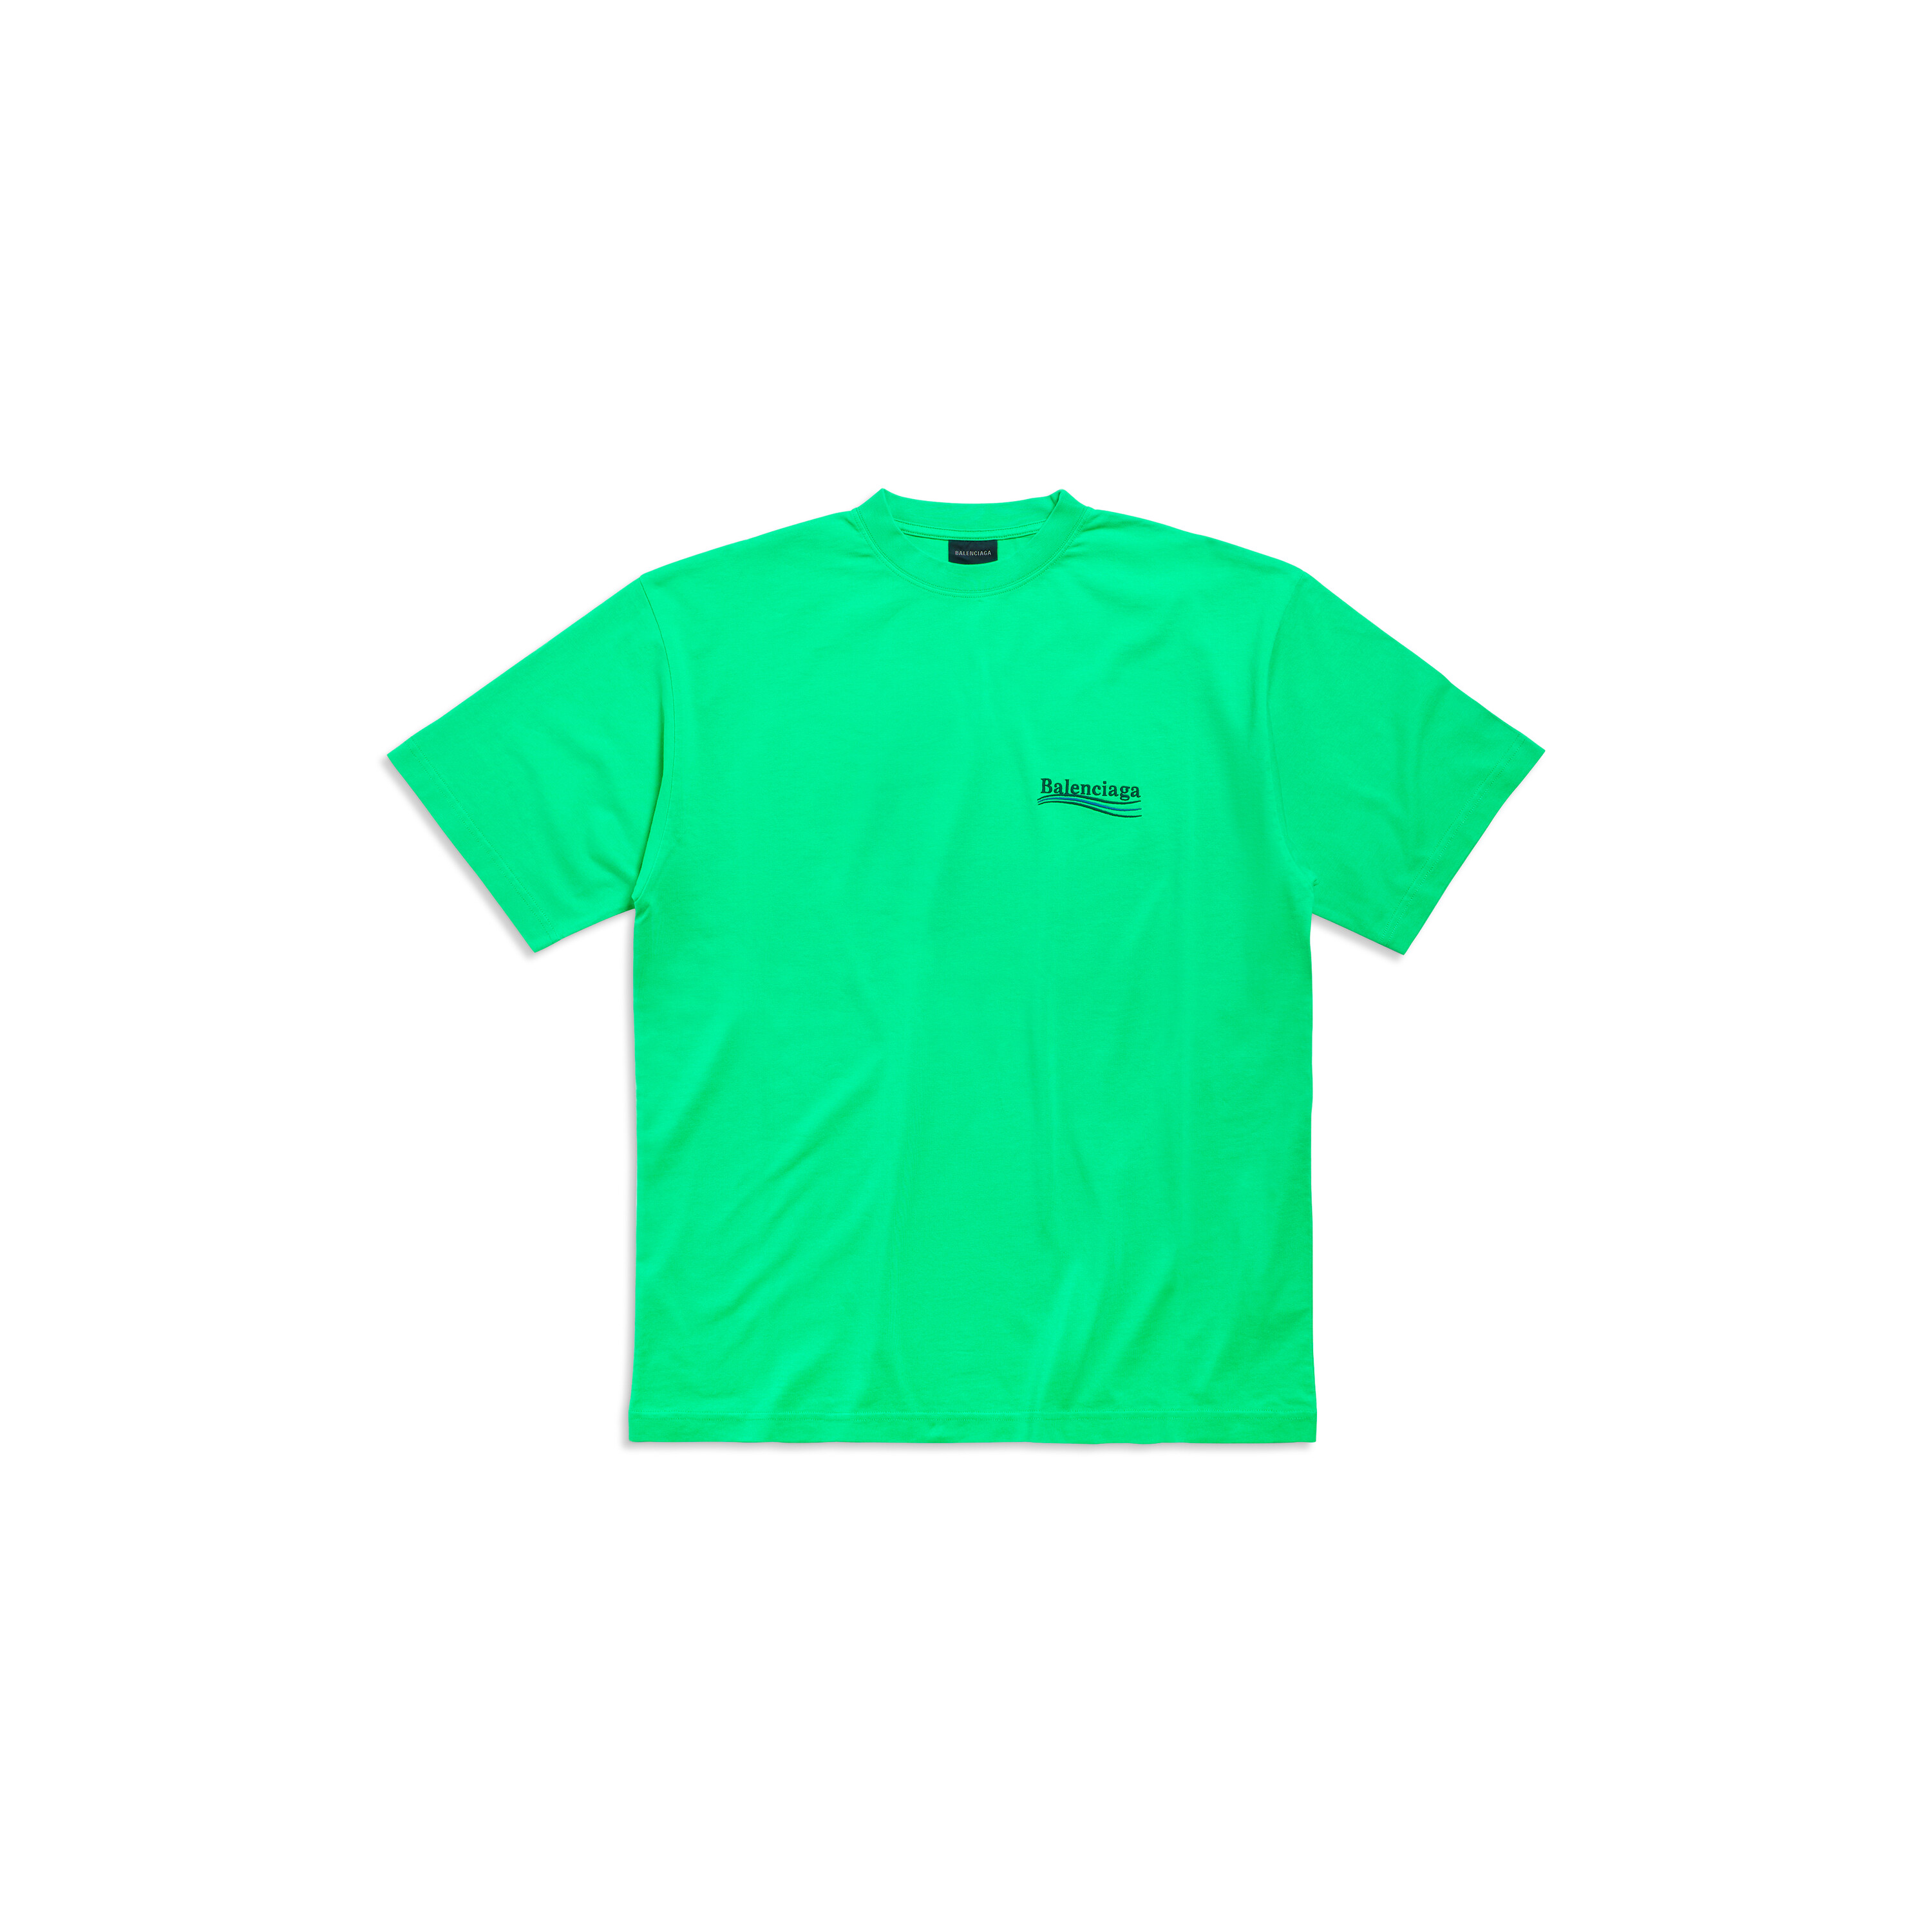 BALENCIAGA  Logo Tshirt Medium Fit Green  Anrosa Store